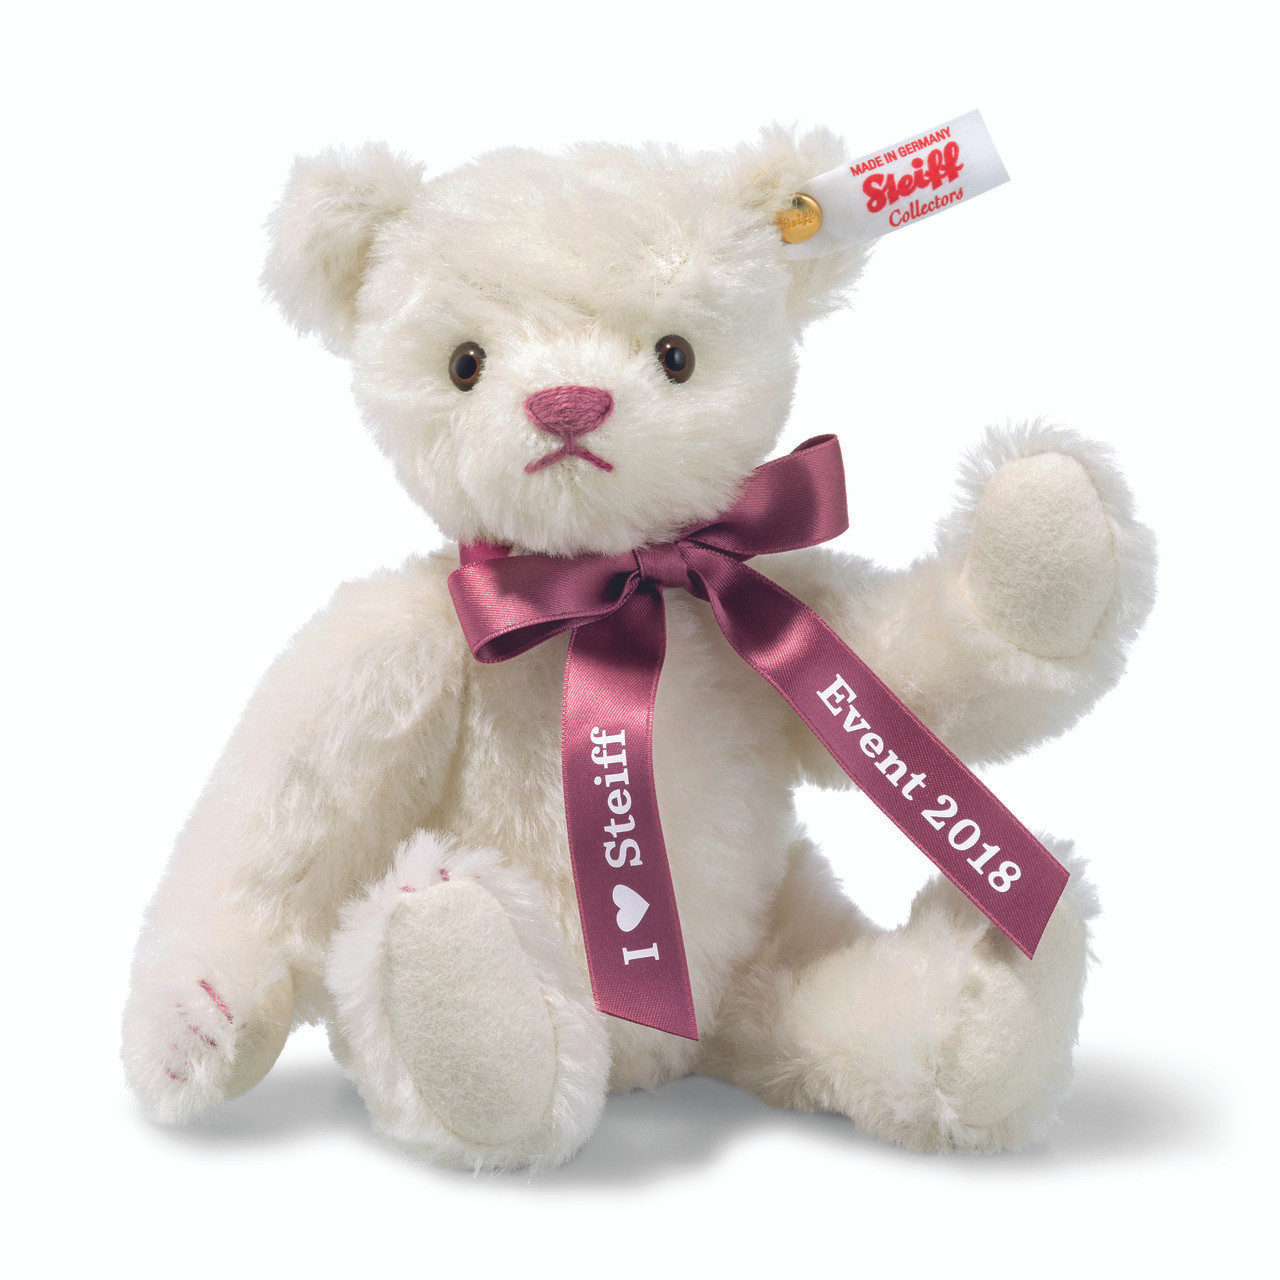 teddy bear online shopping offers